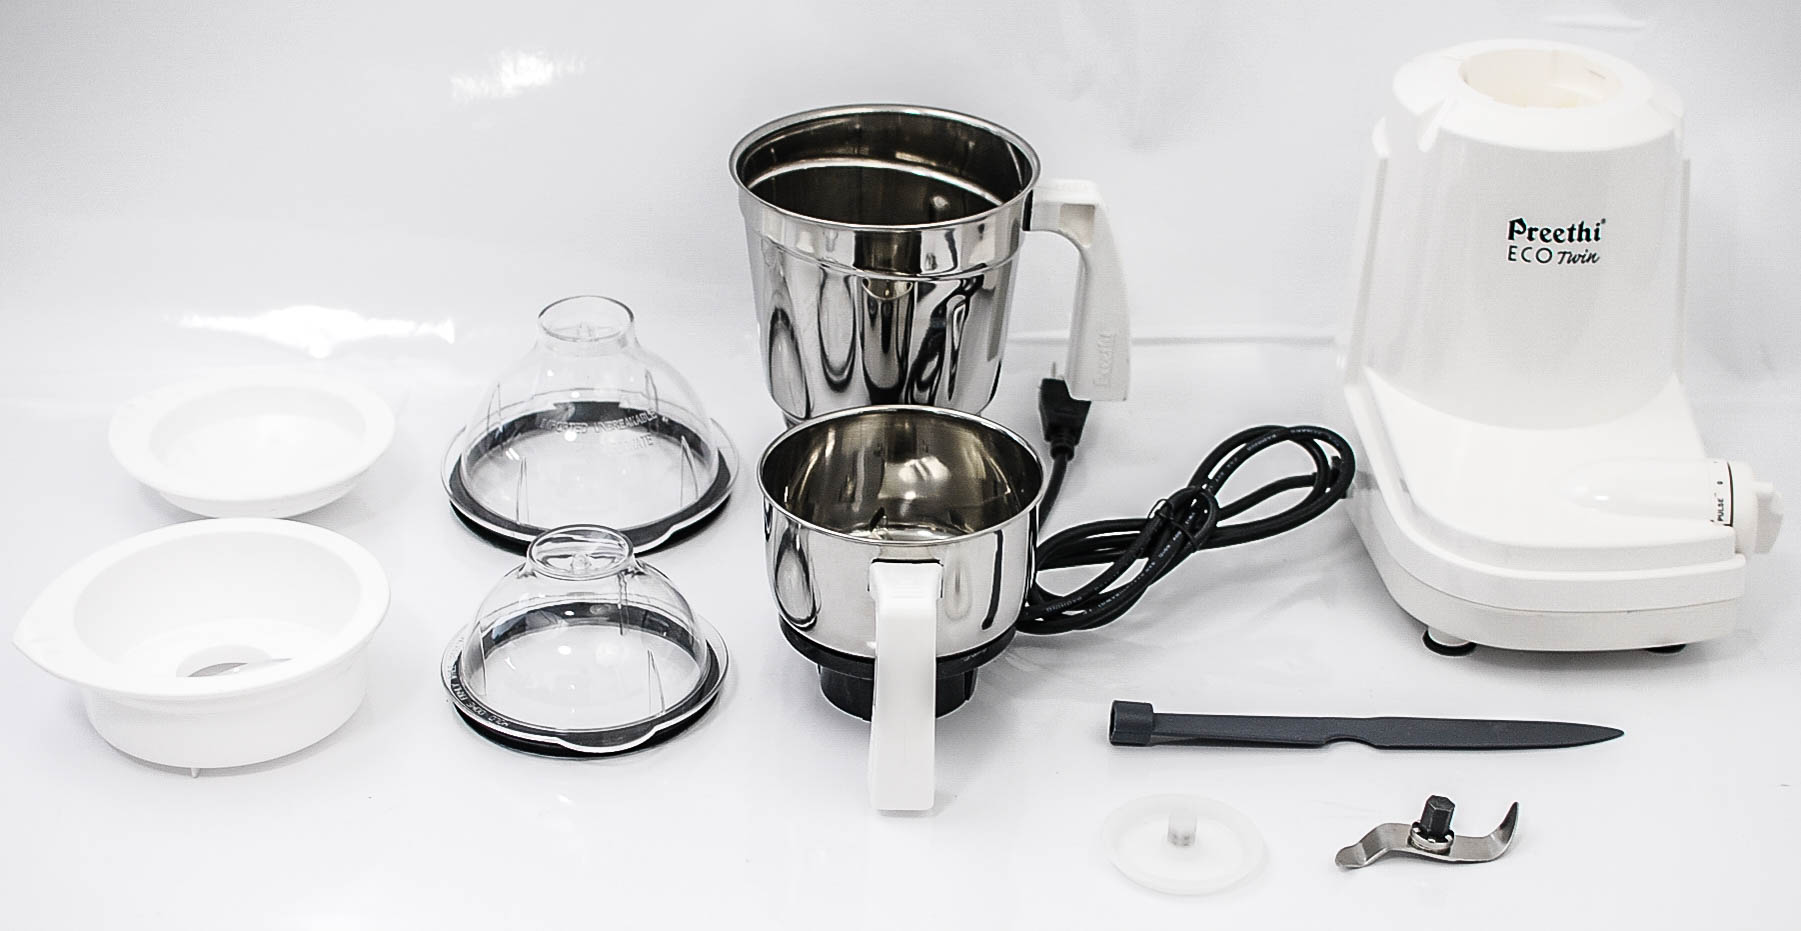 Kitchen favorites: Preethi mixer grinder, 3-qt Instant Pot $59+